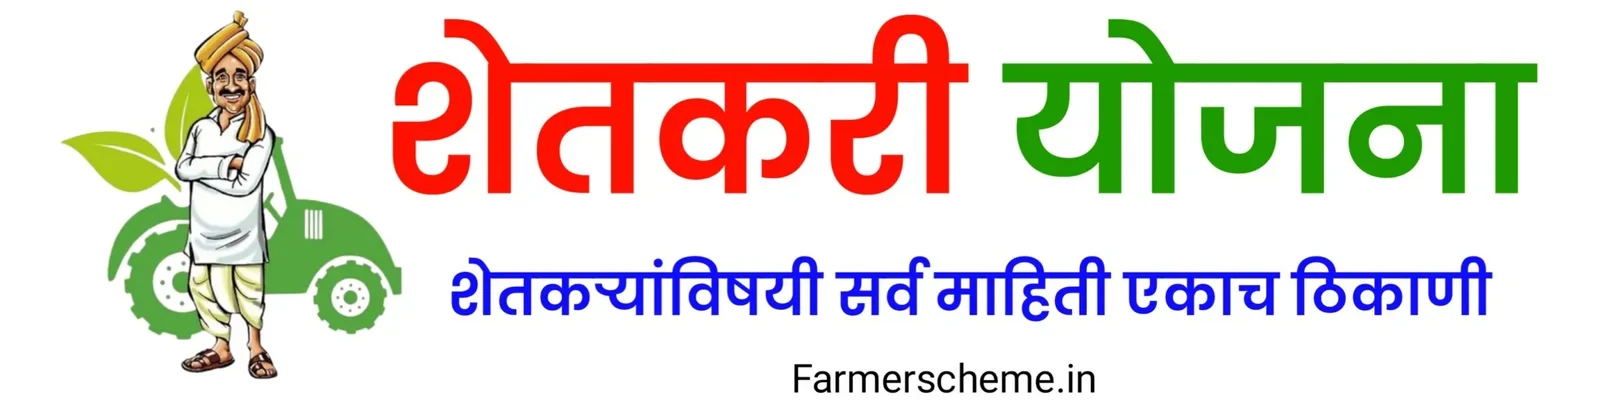 Farmer Scheme